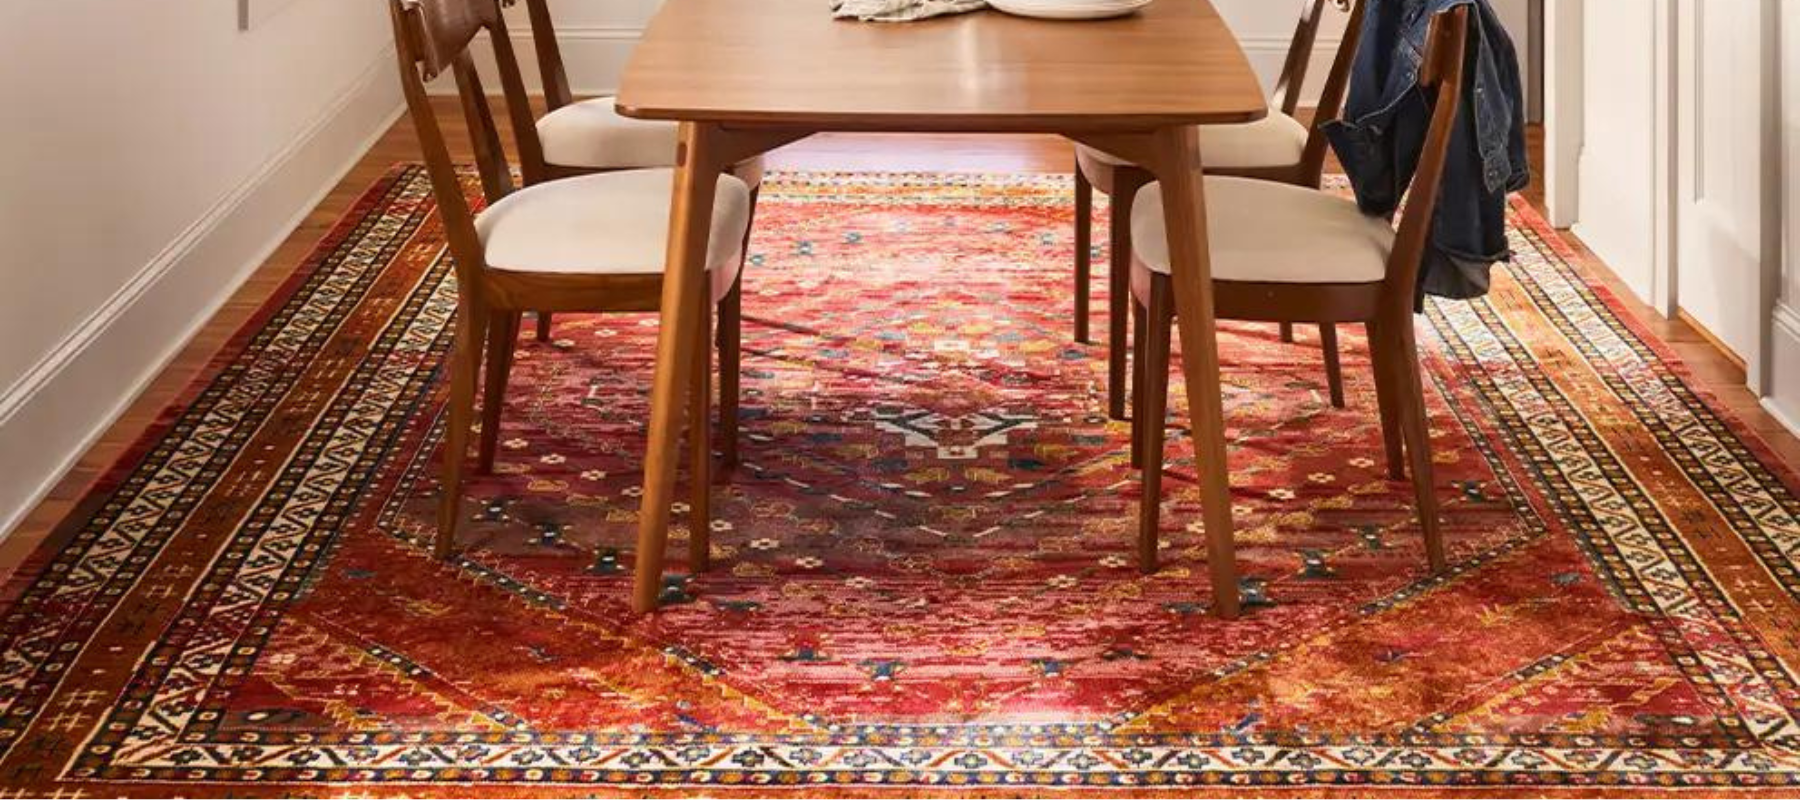 affordable rugs portland oregon